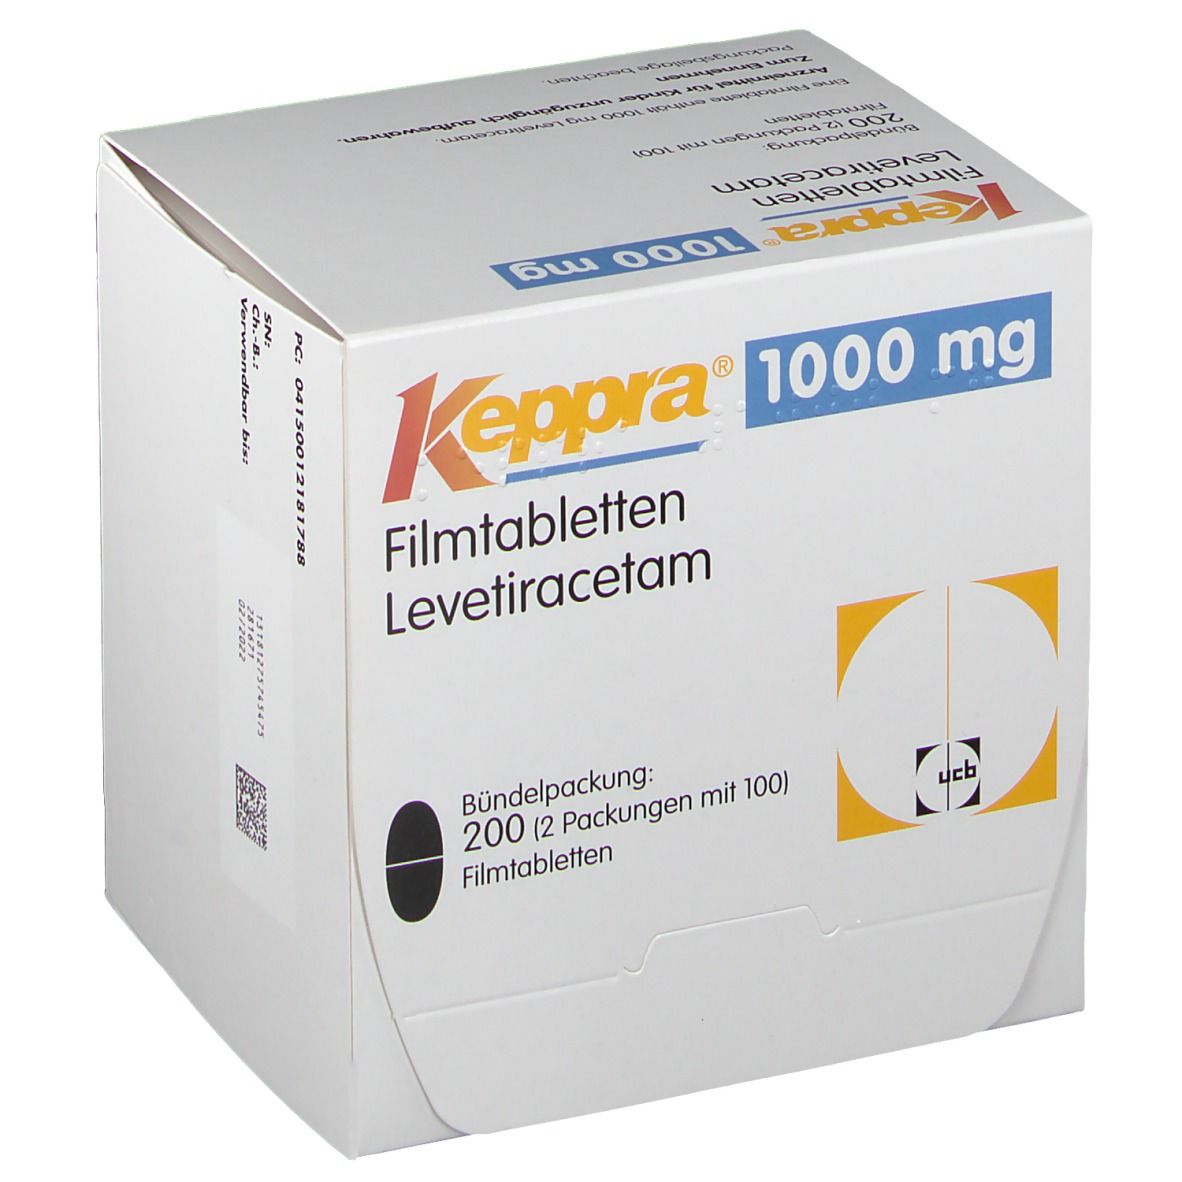 Keppra® 1000 mg